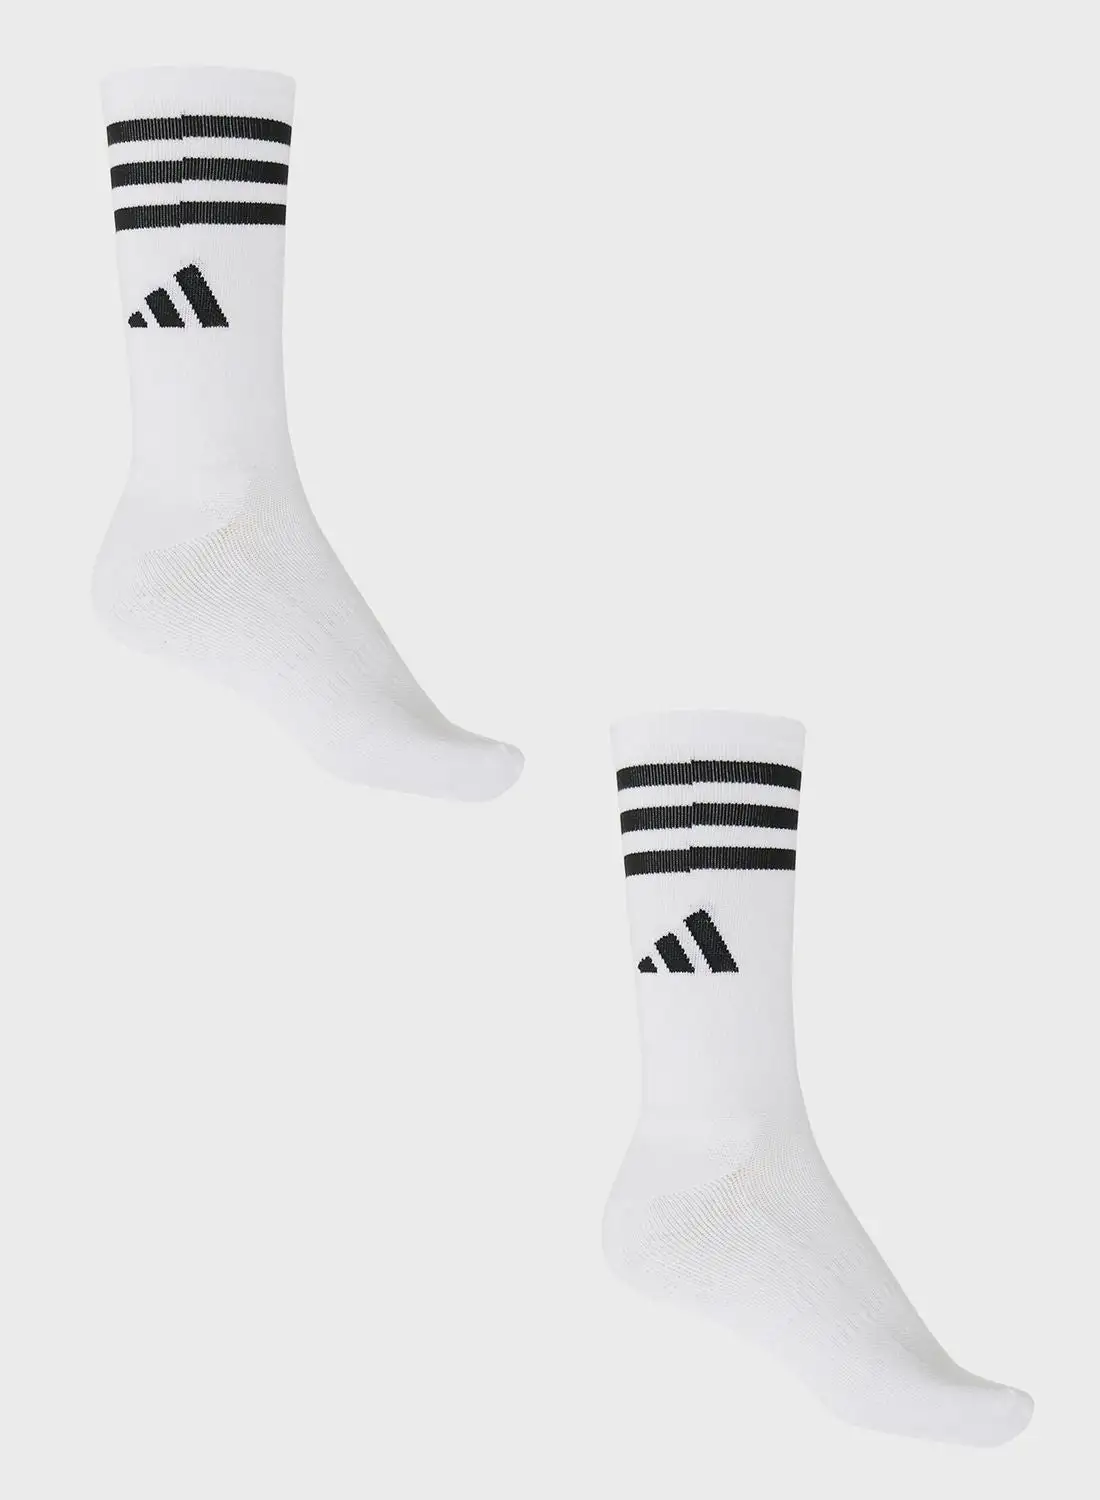 Adidas 3 Pack Crew Socks